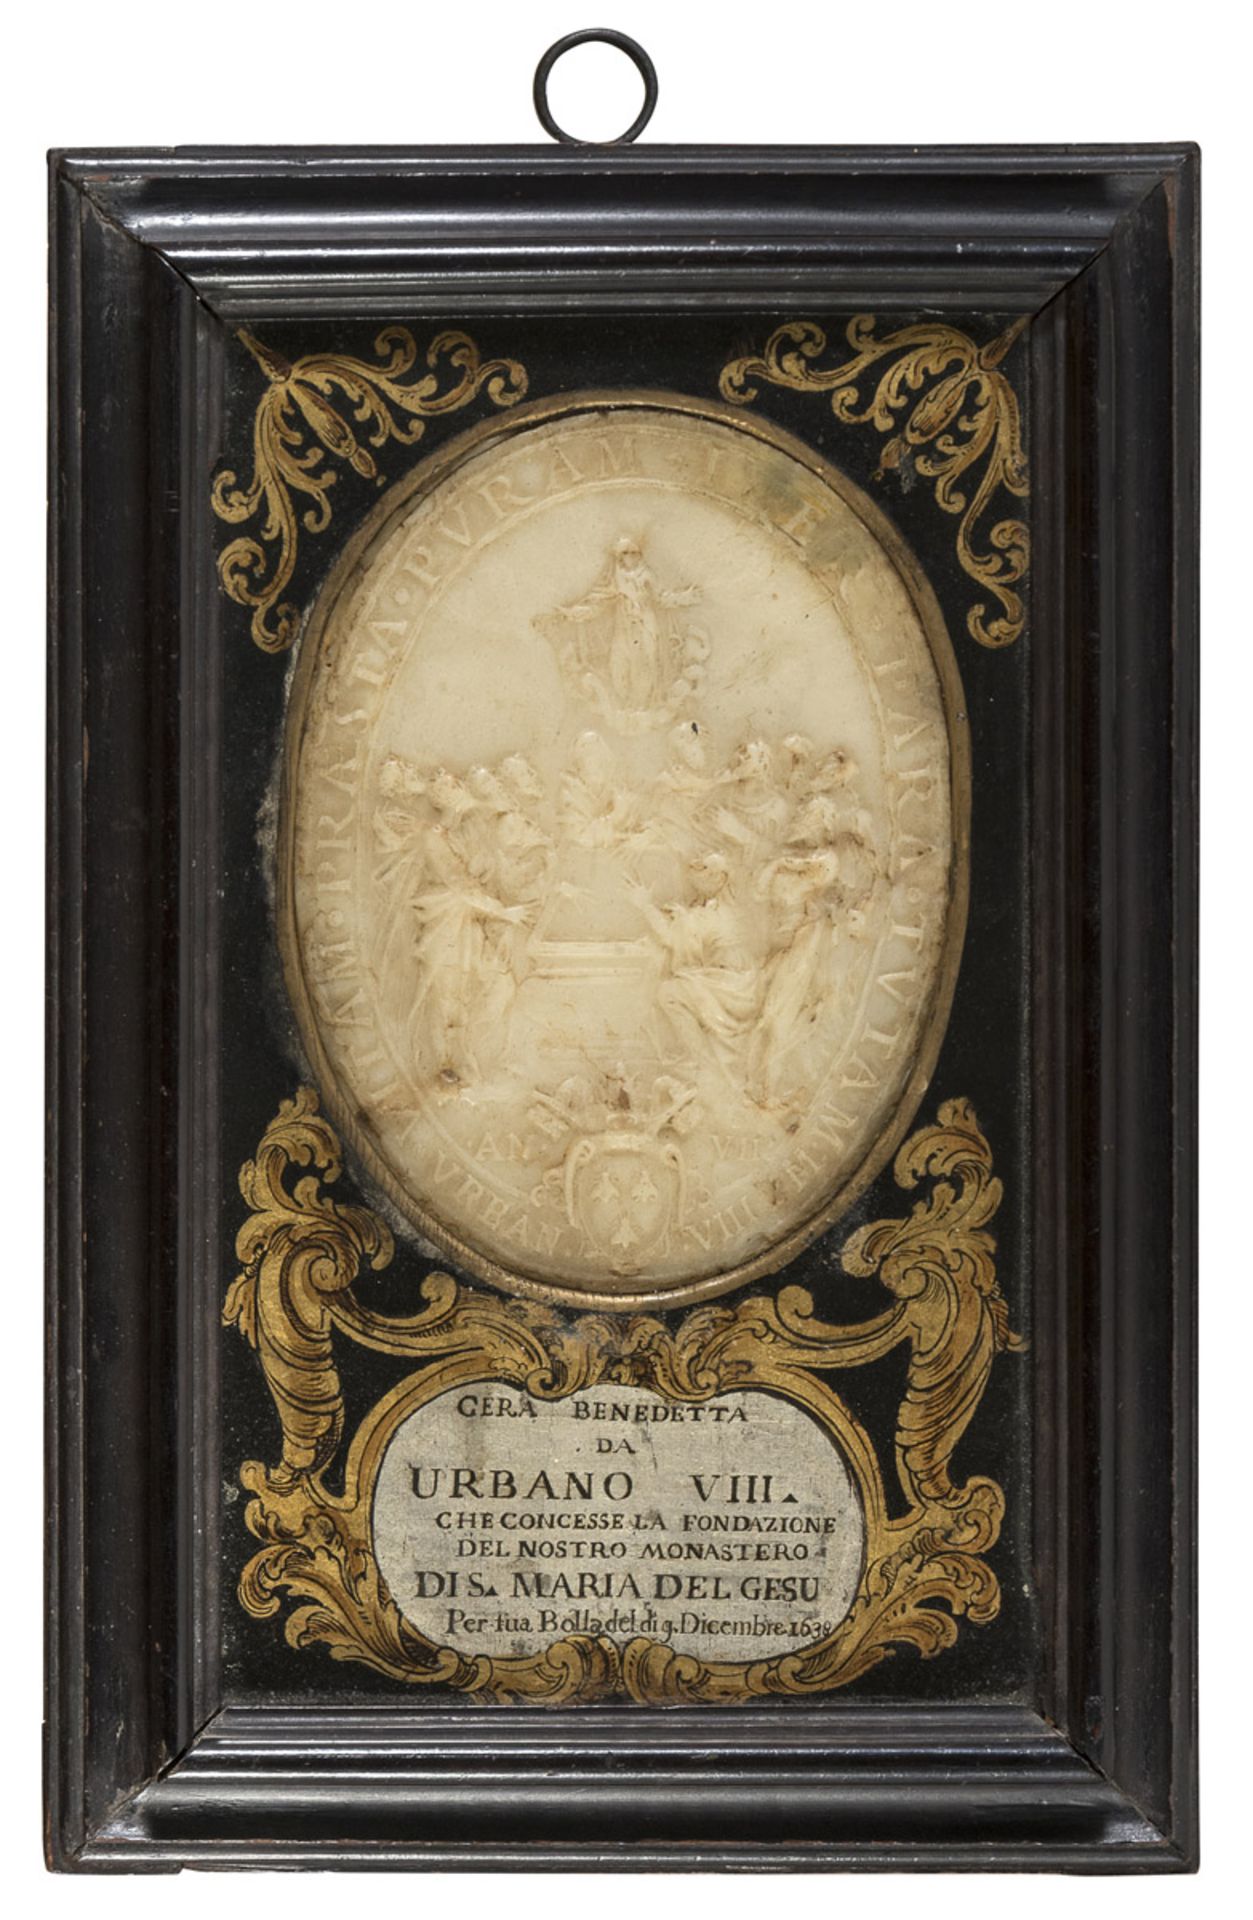 IMPORTANT HALLOWED WAX OF URBANO VIII BARBERINI - FIRST HALF OF THE 17TH CENTURY